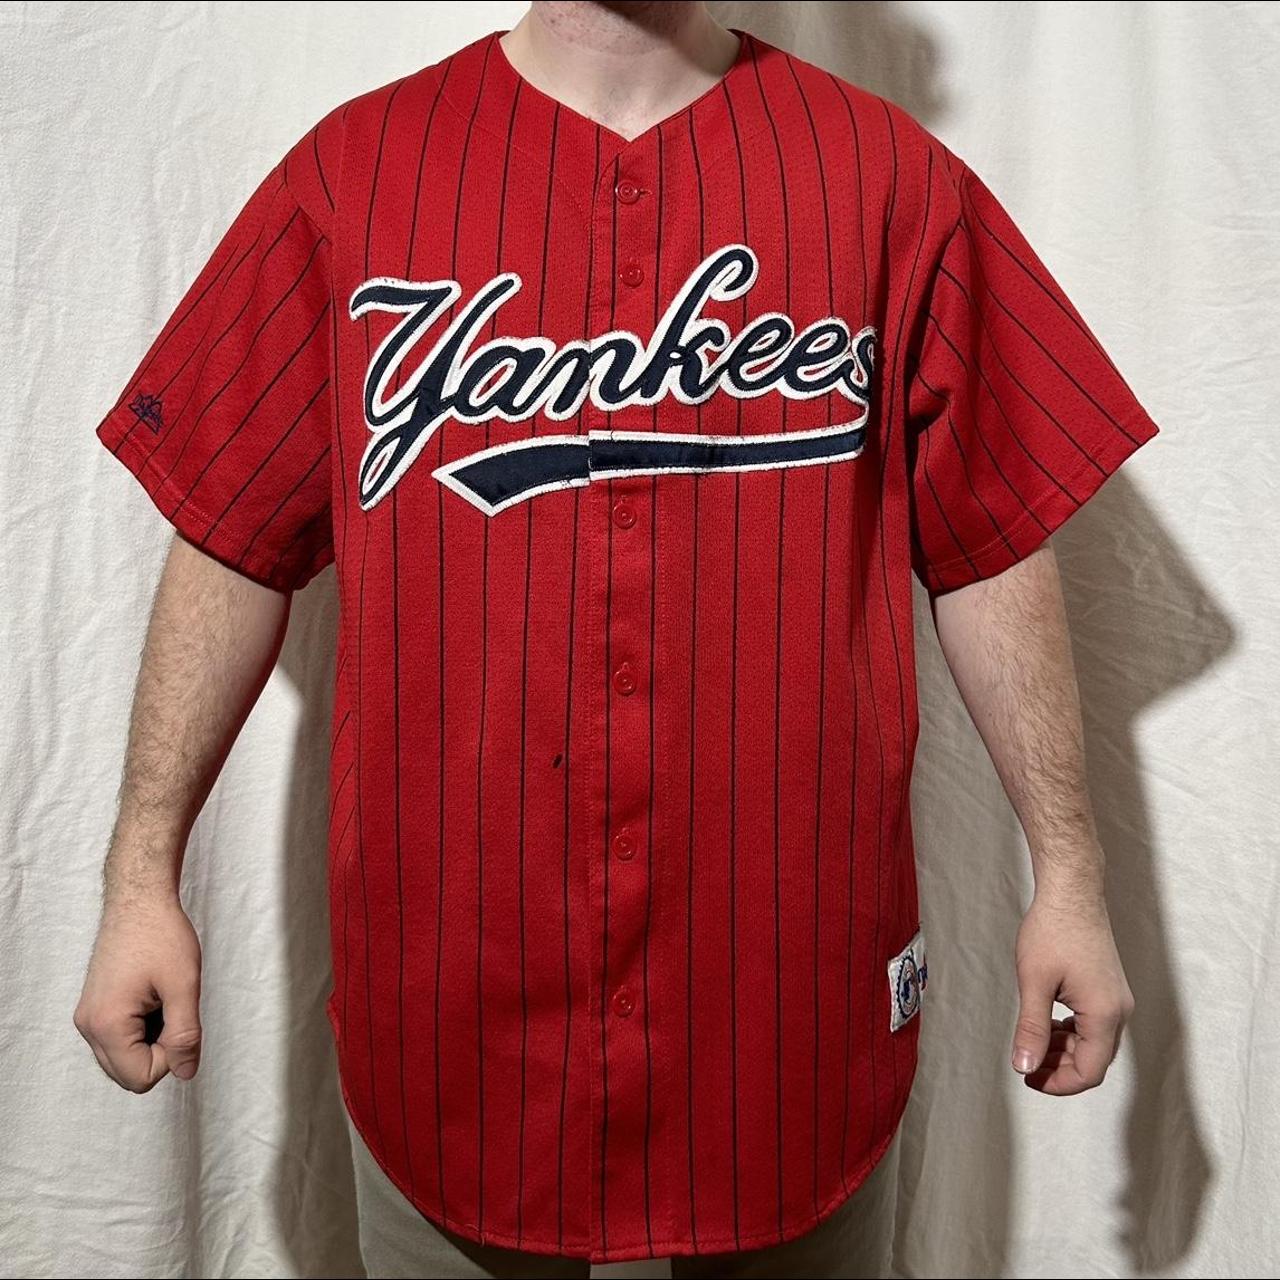 Majestic New York Yankees Mesh Jersey at